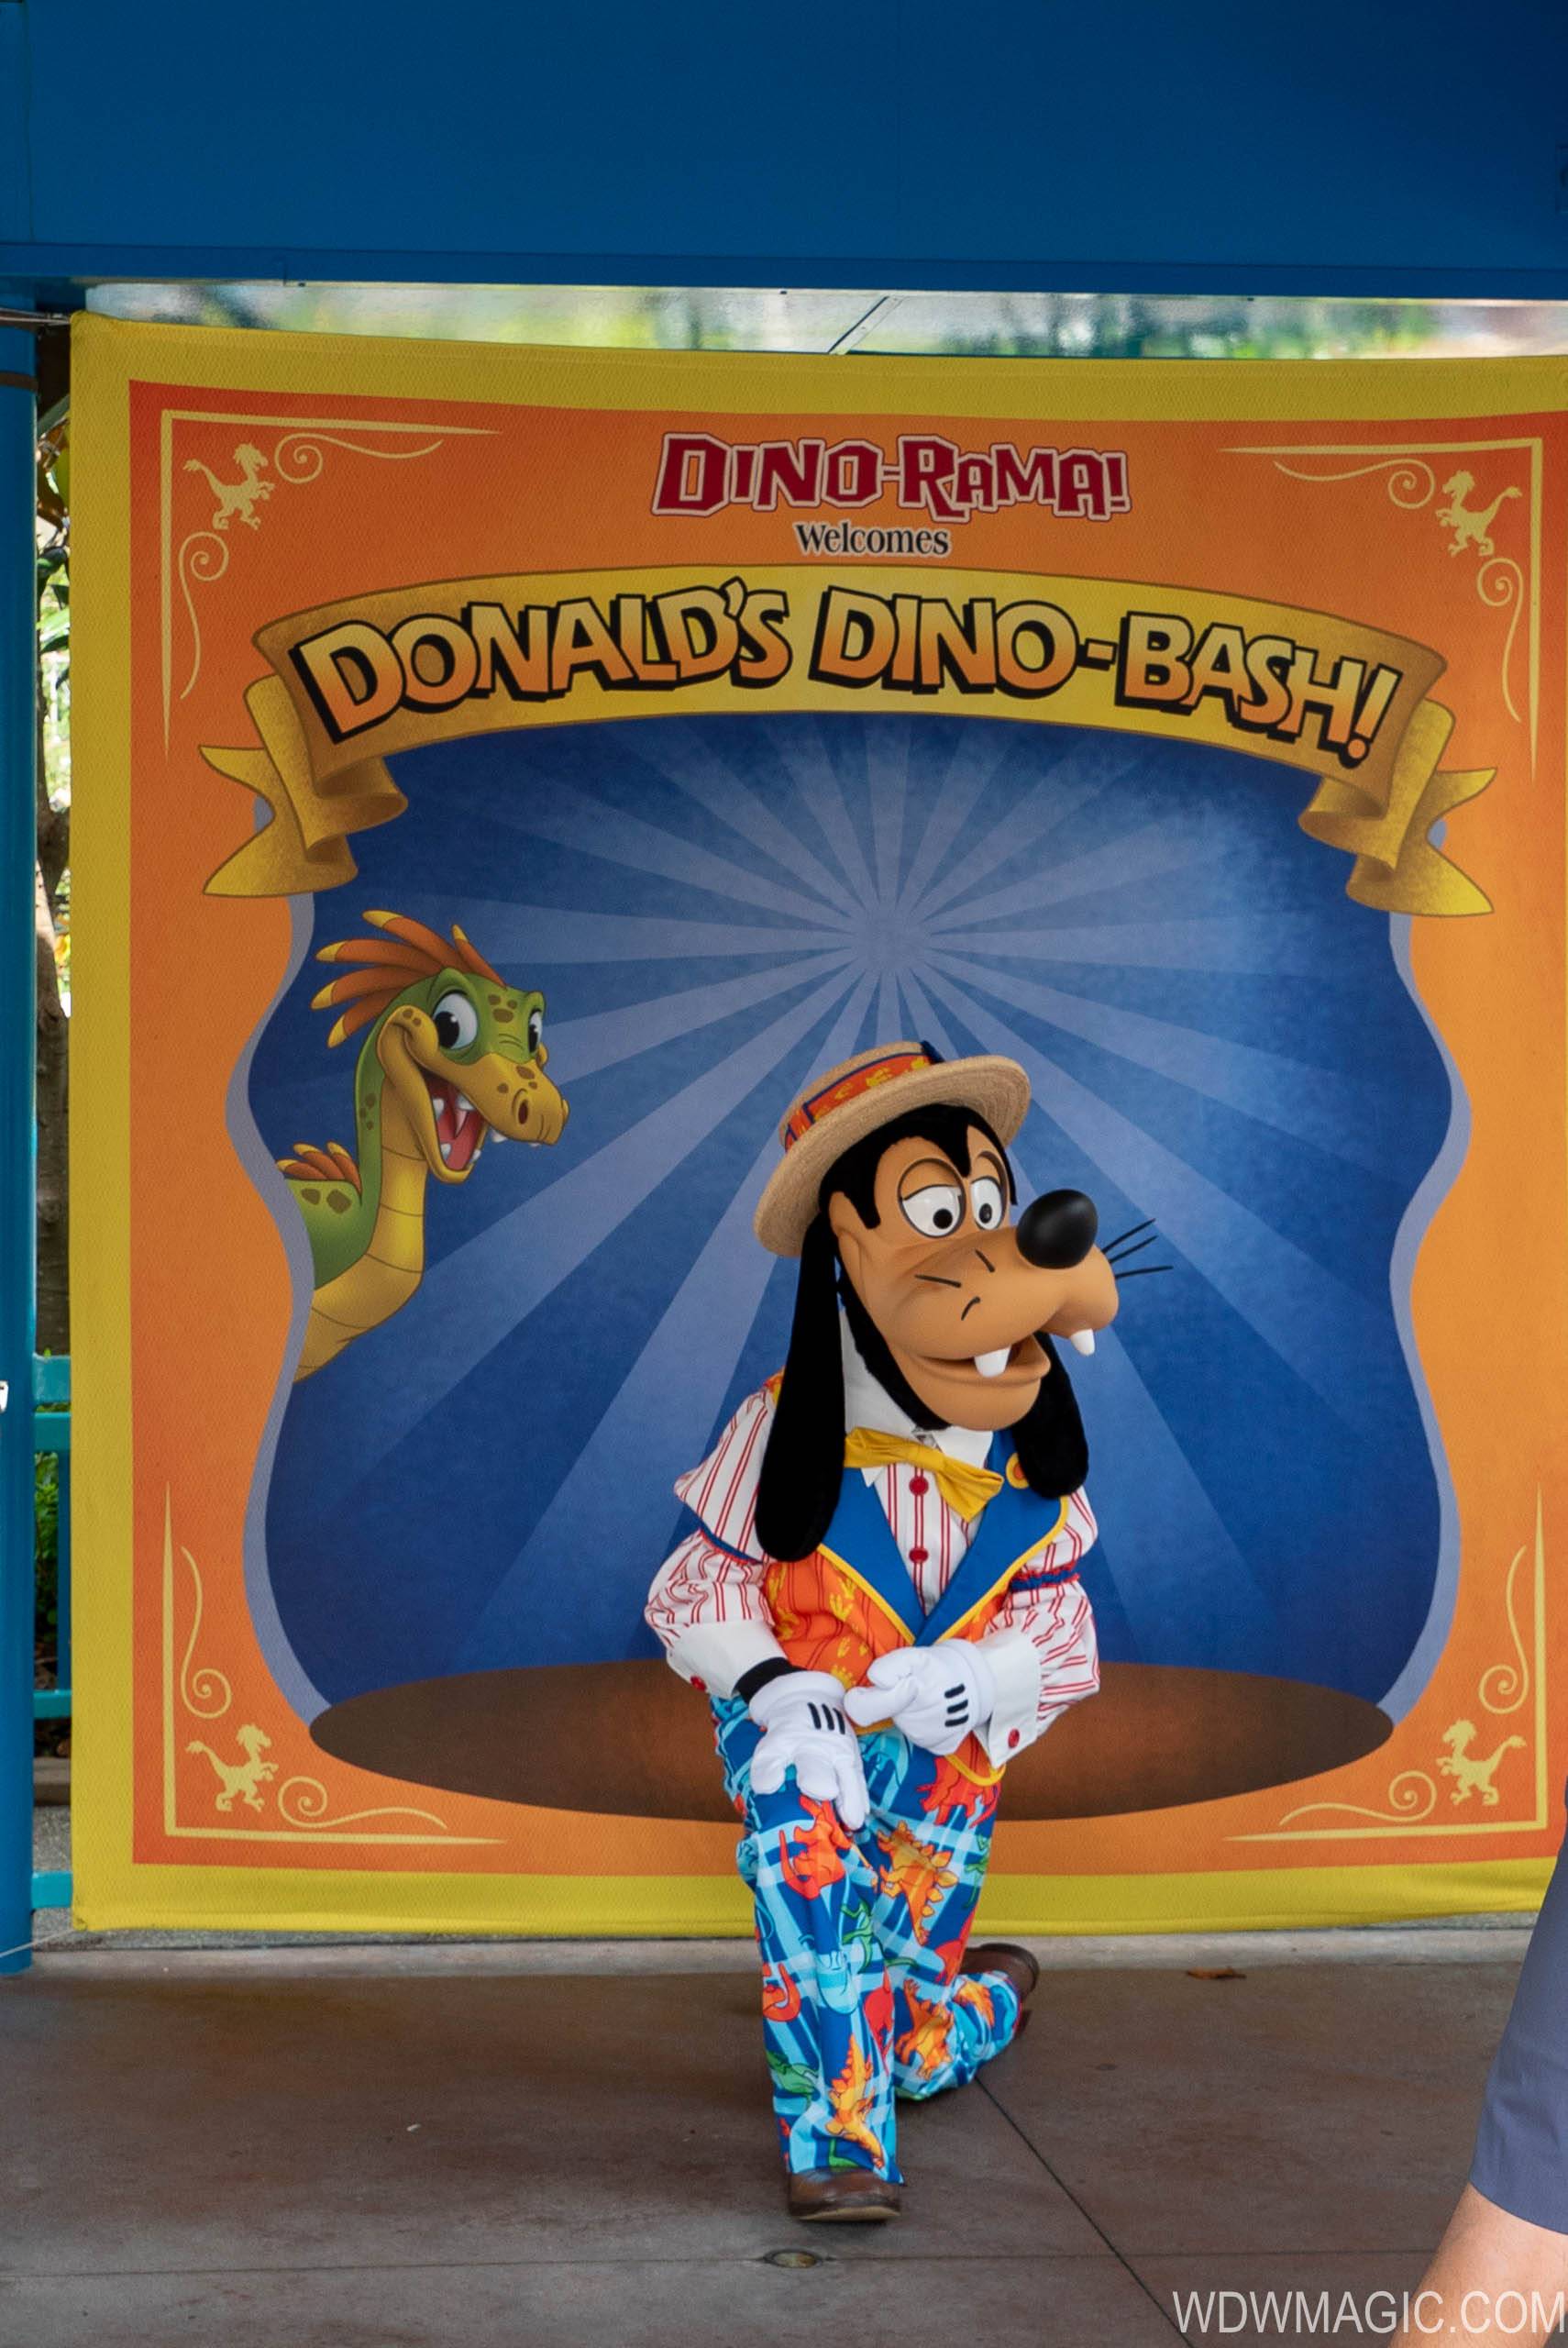 Donald's Dino-Bash!